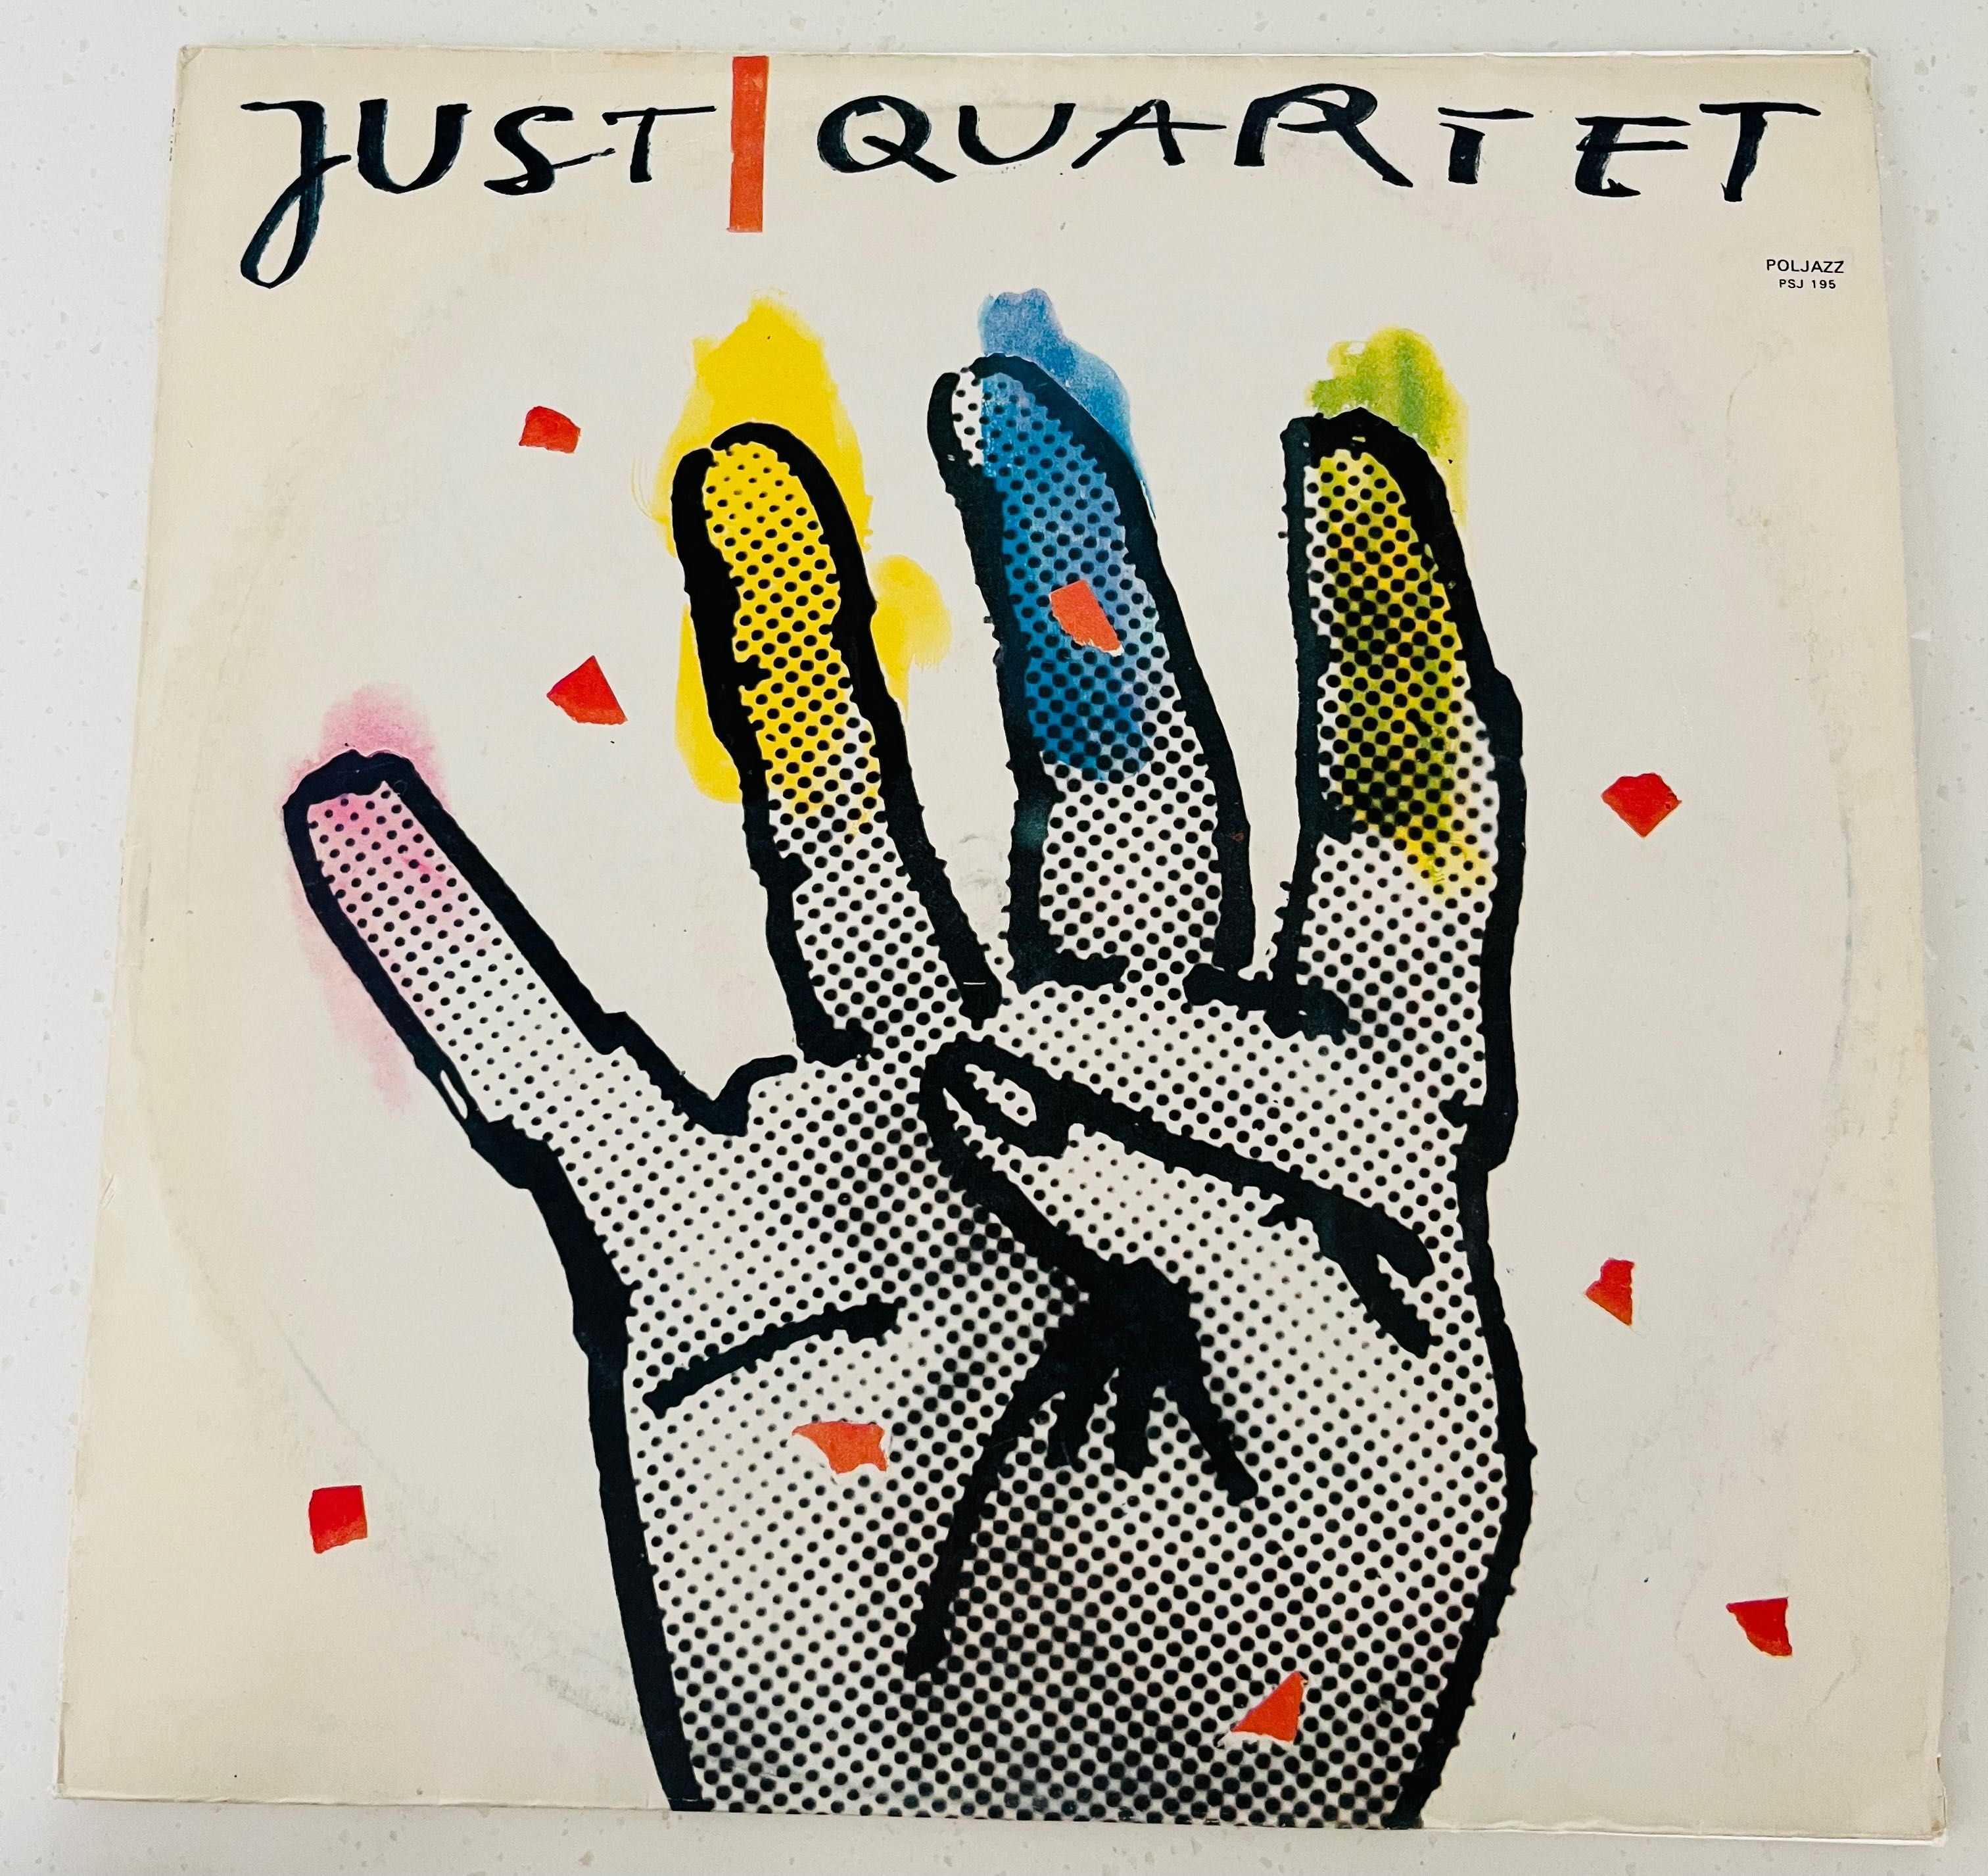 Płyta Winylowa Just Quartet